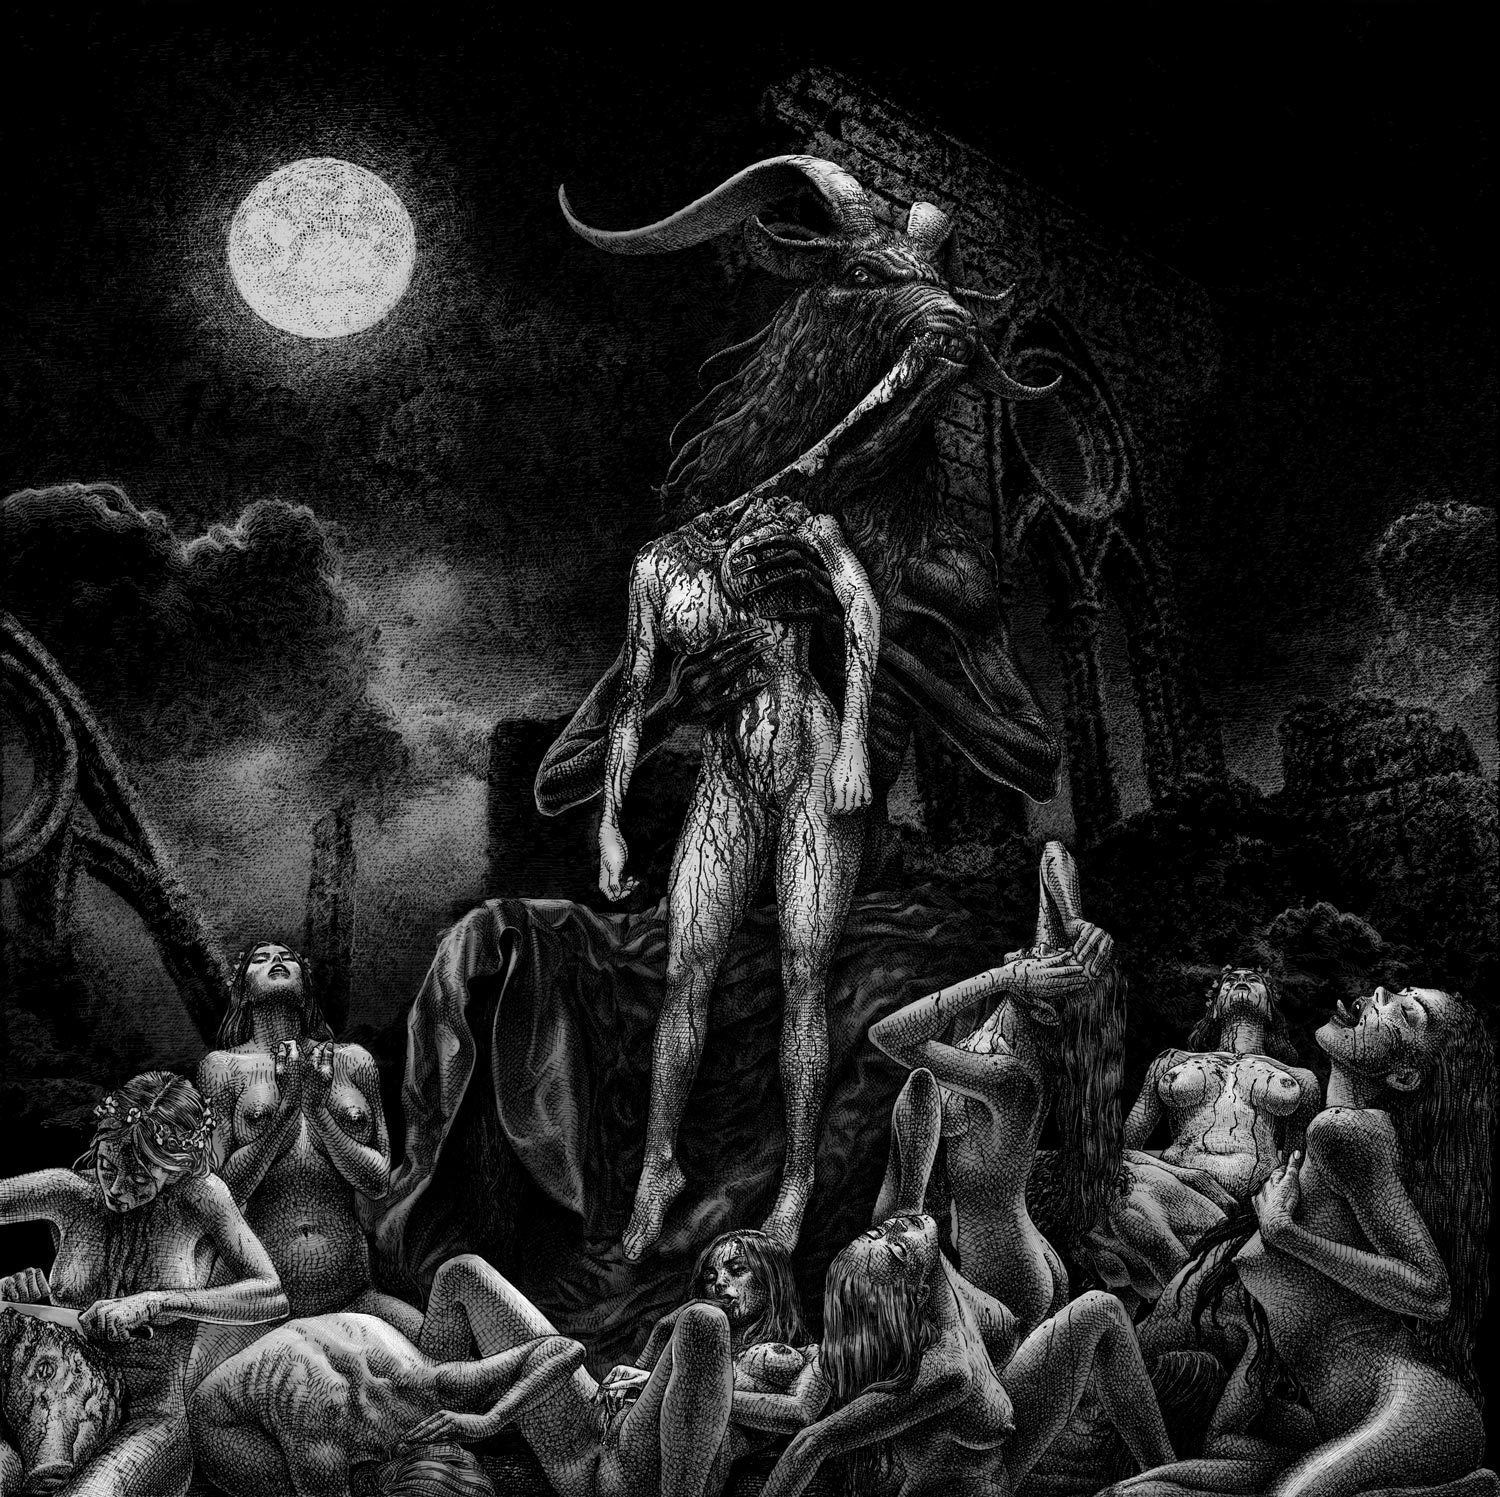 Erotic demon illustrations